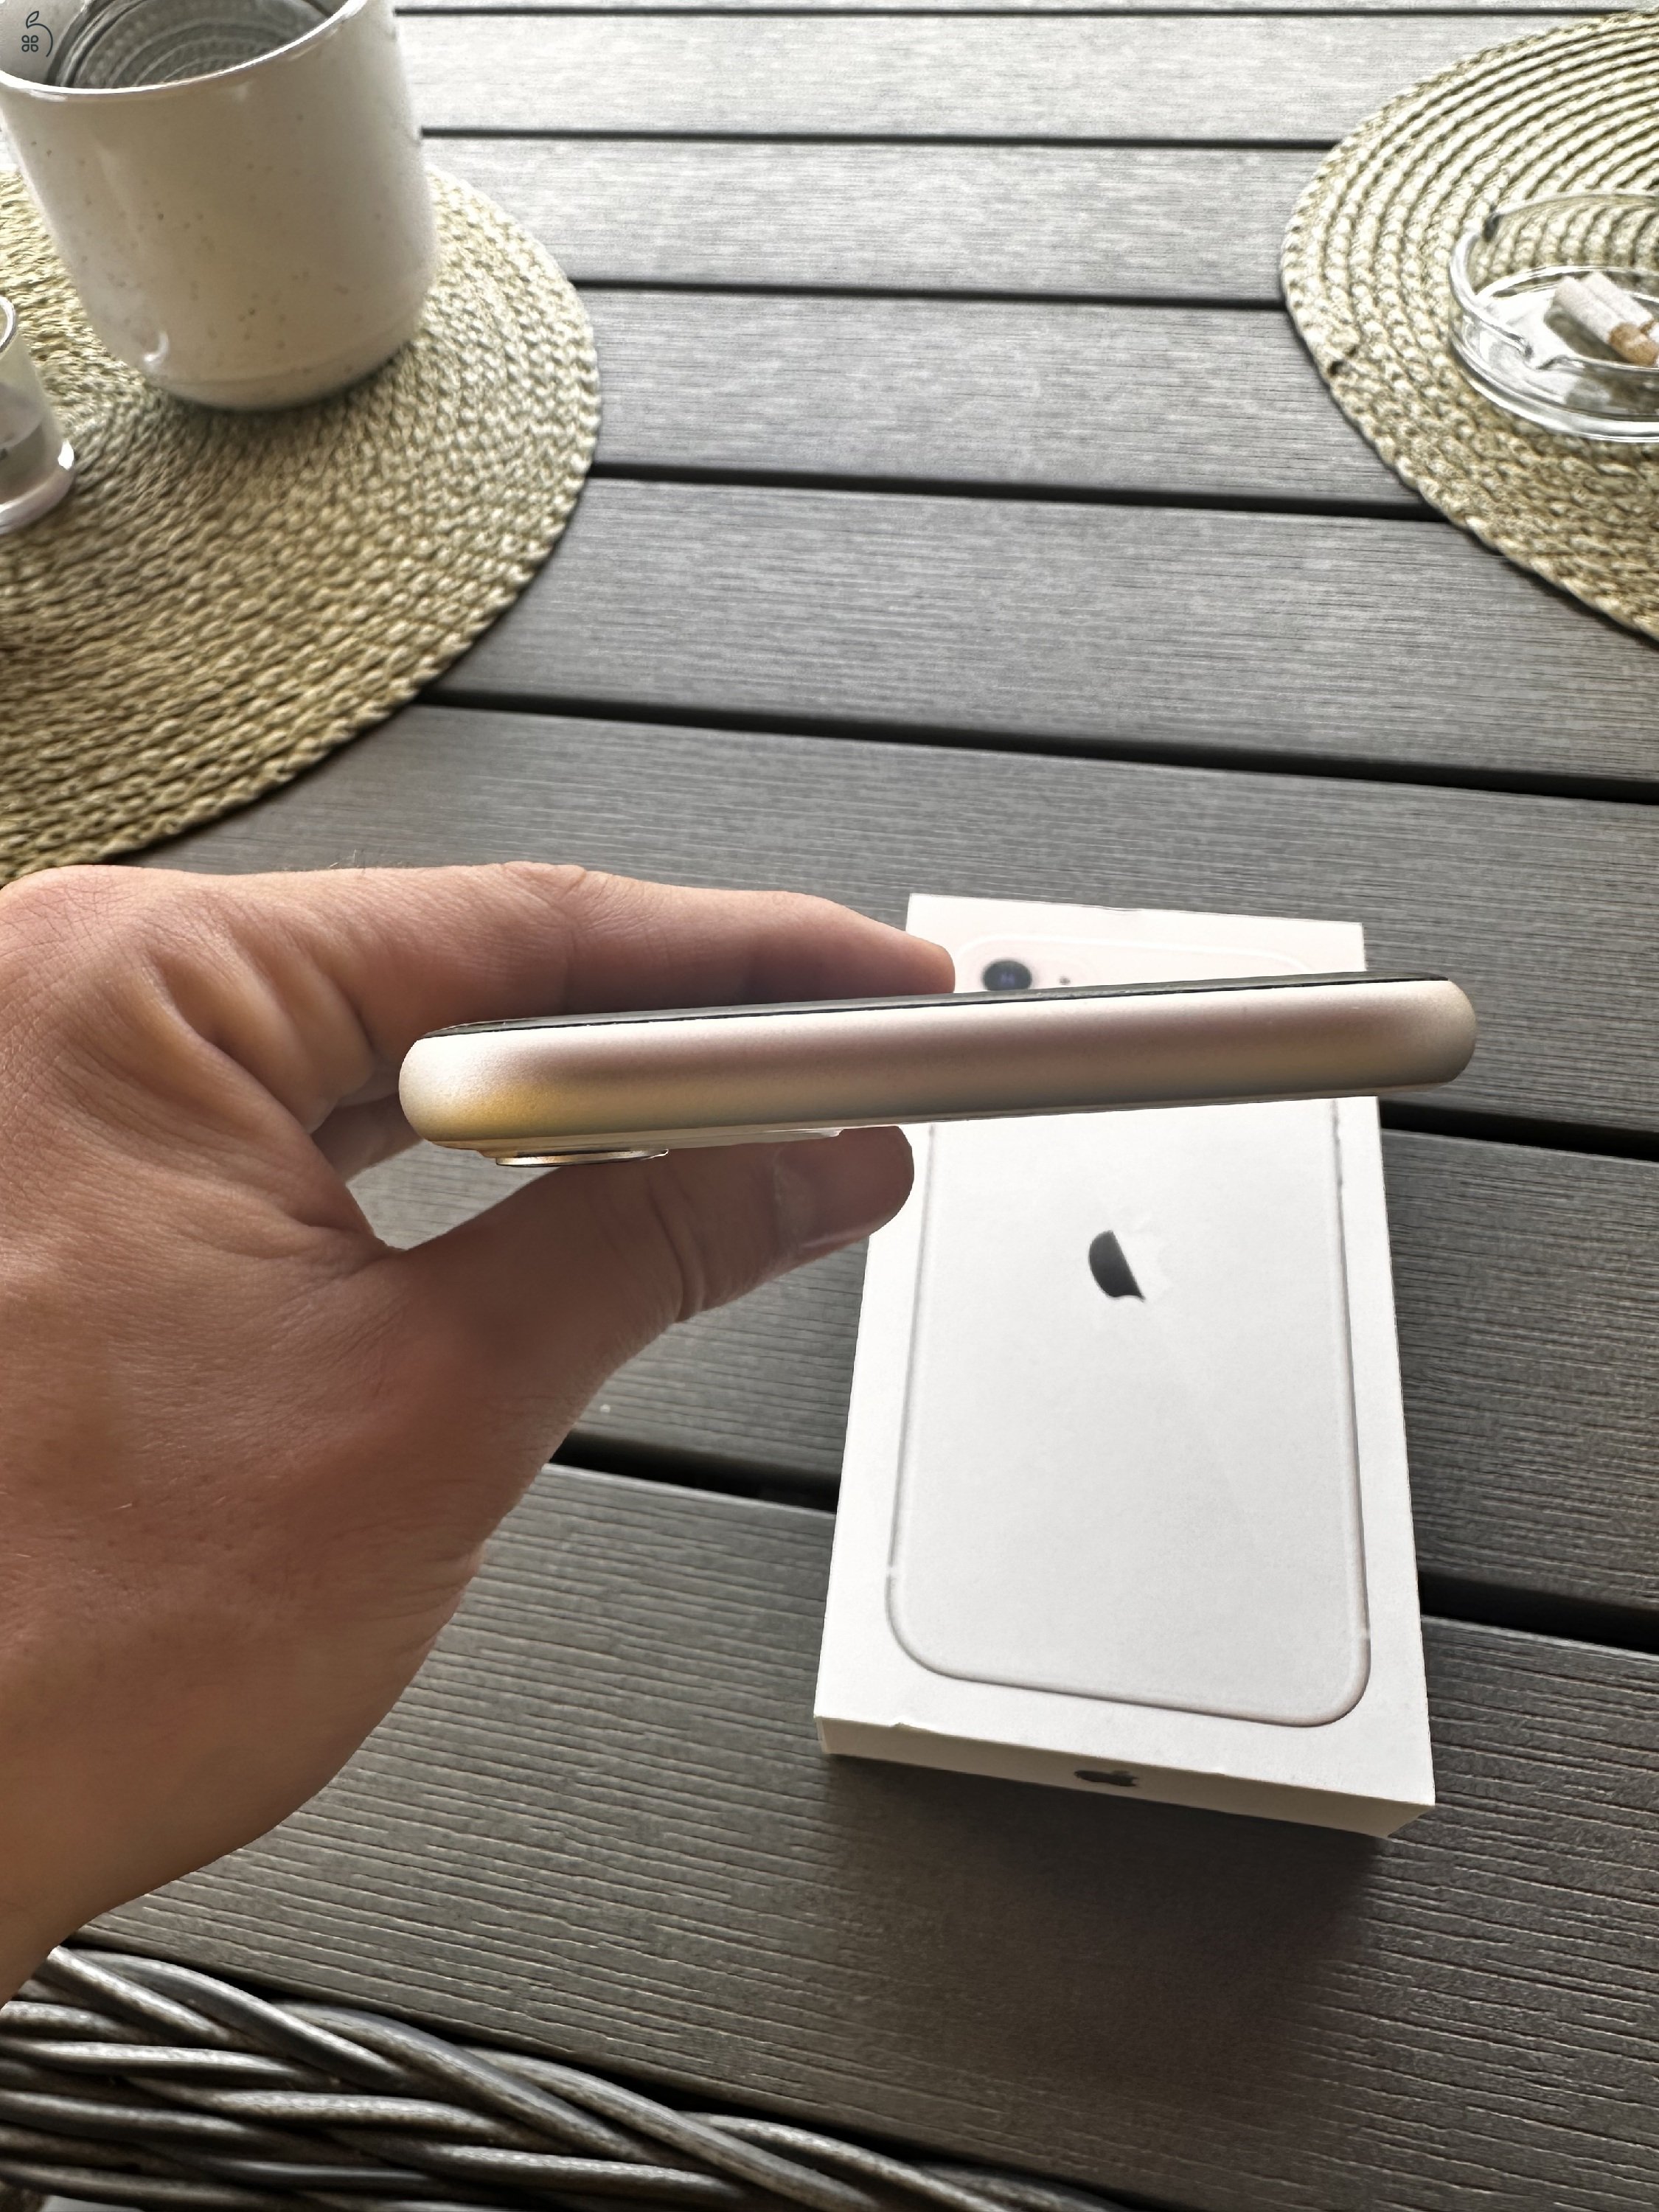 Iphone 11 független fehér 64gb